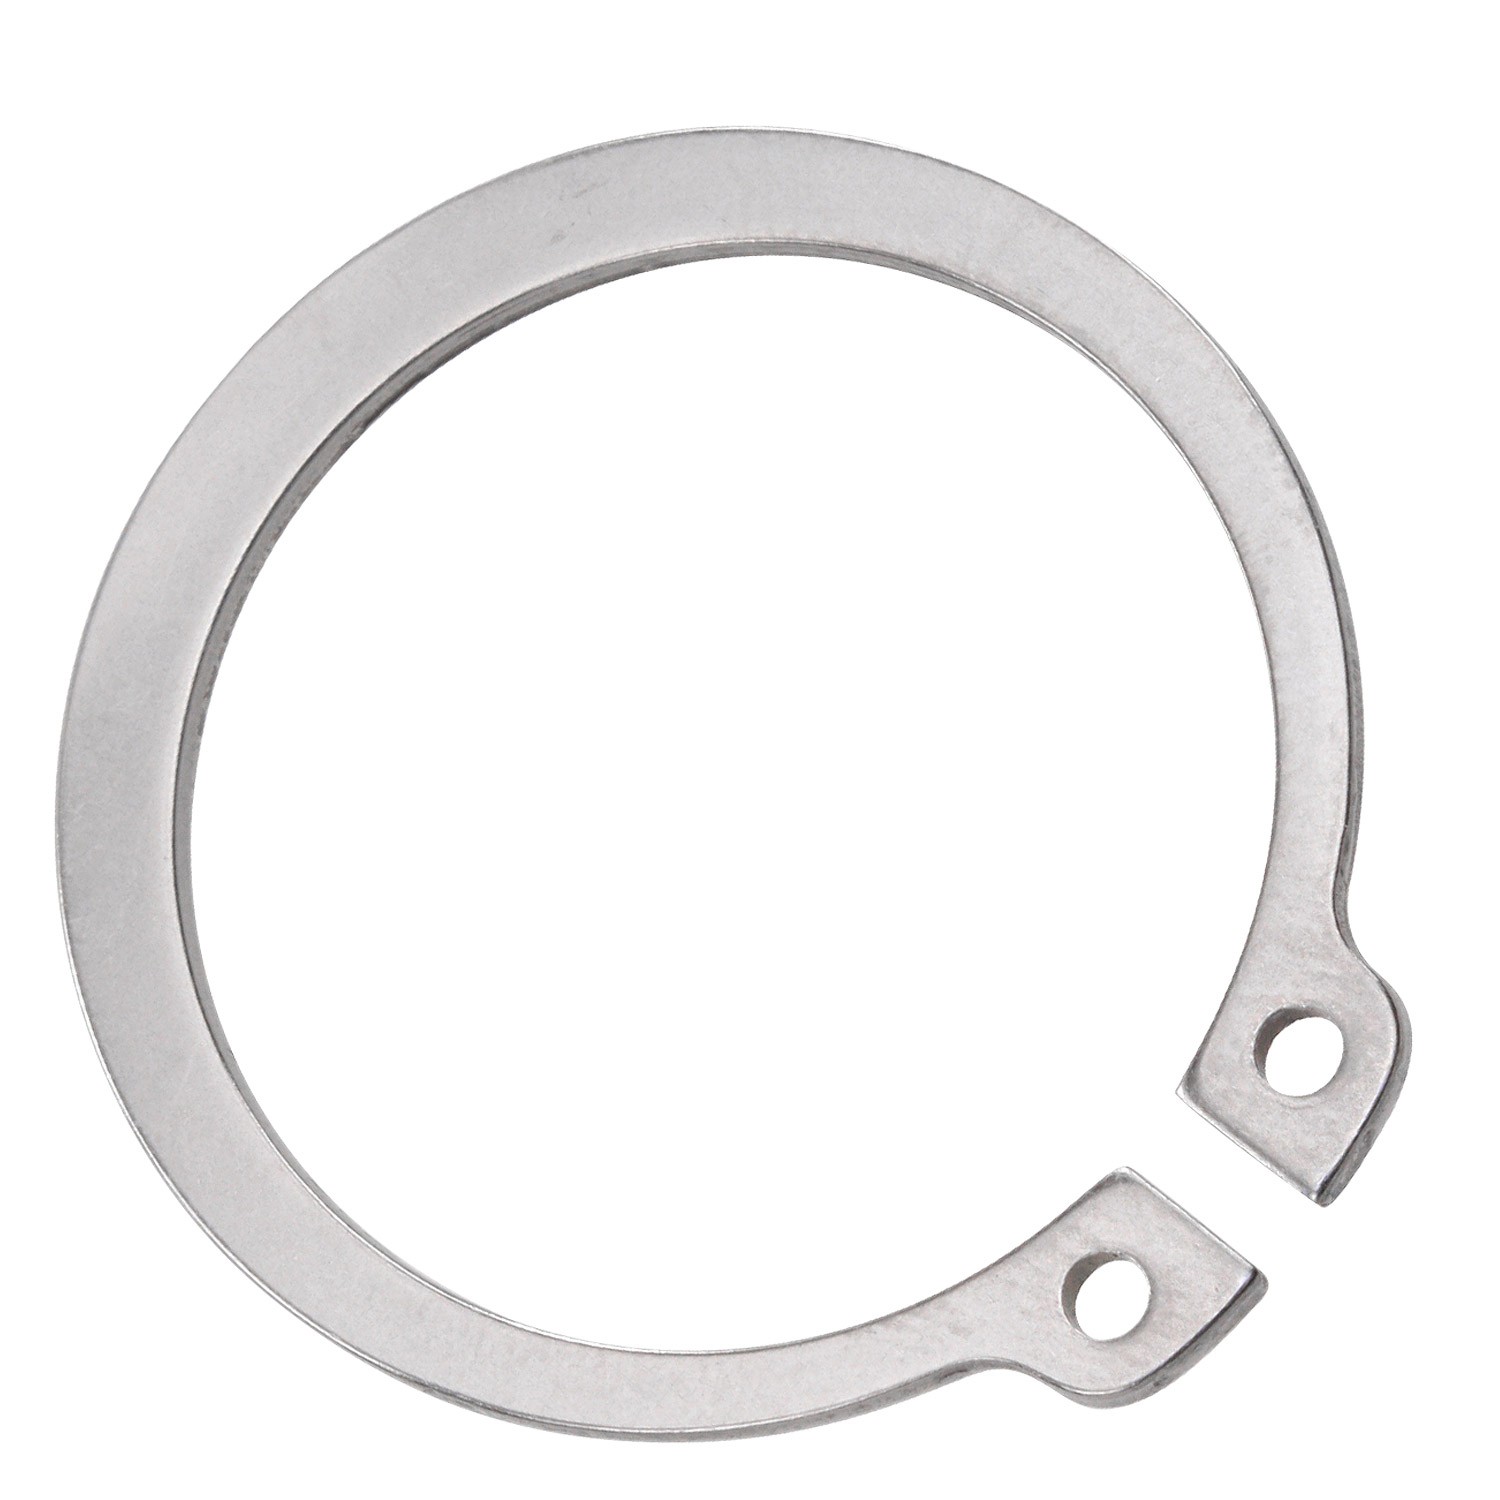 Кольцо стопорное наружное 25х1,2 DIN 471, нержавеющая сталь A4 - фото